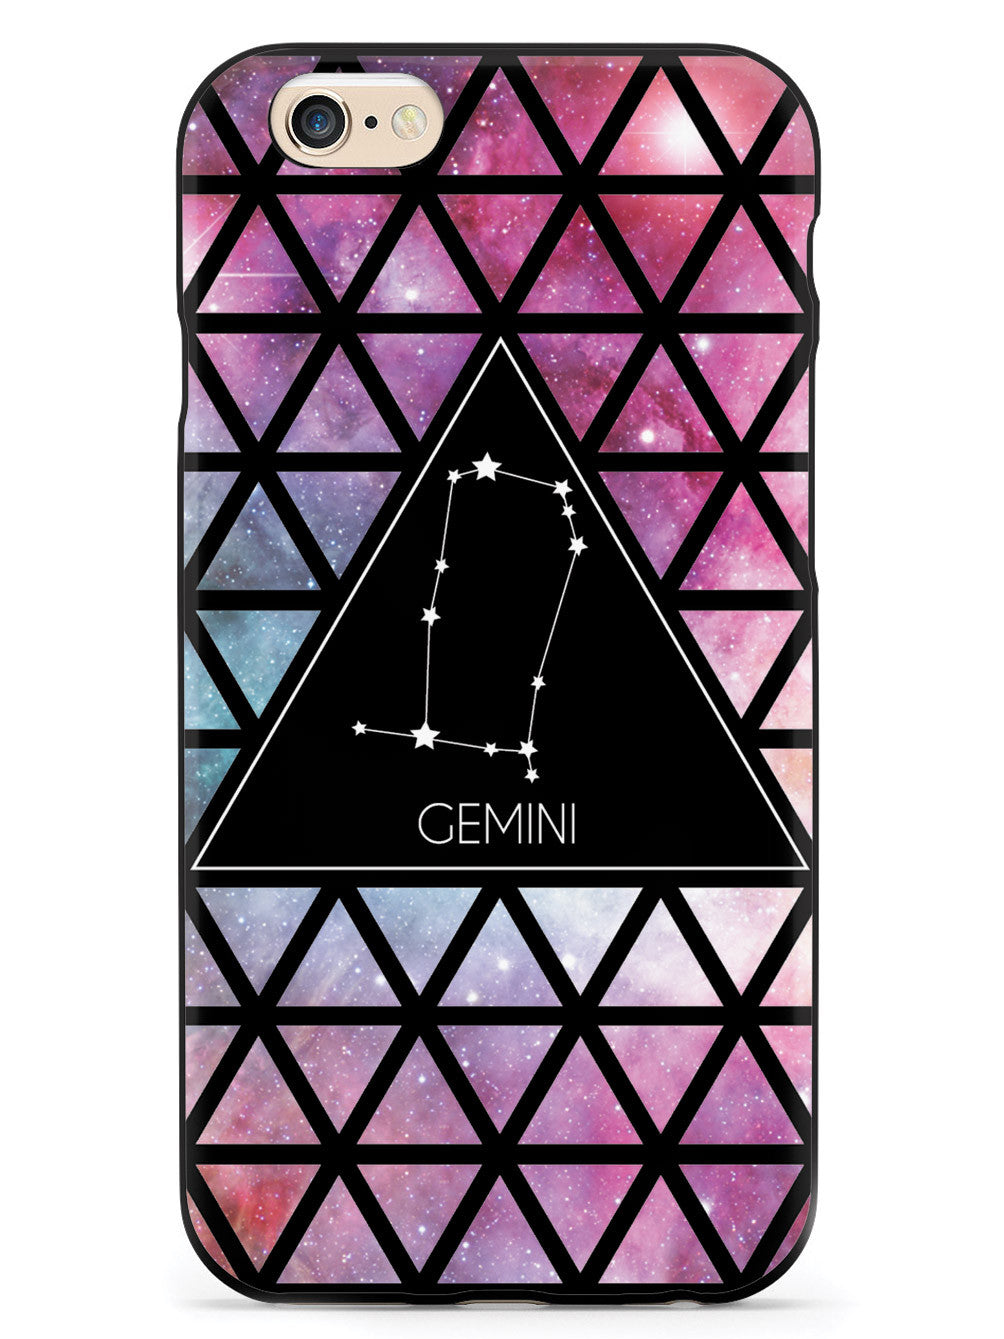 Zodiac Constellation - Gemini Case